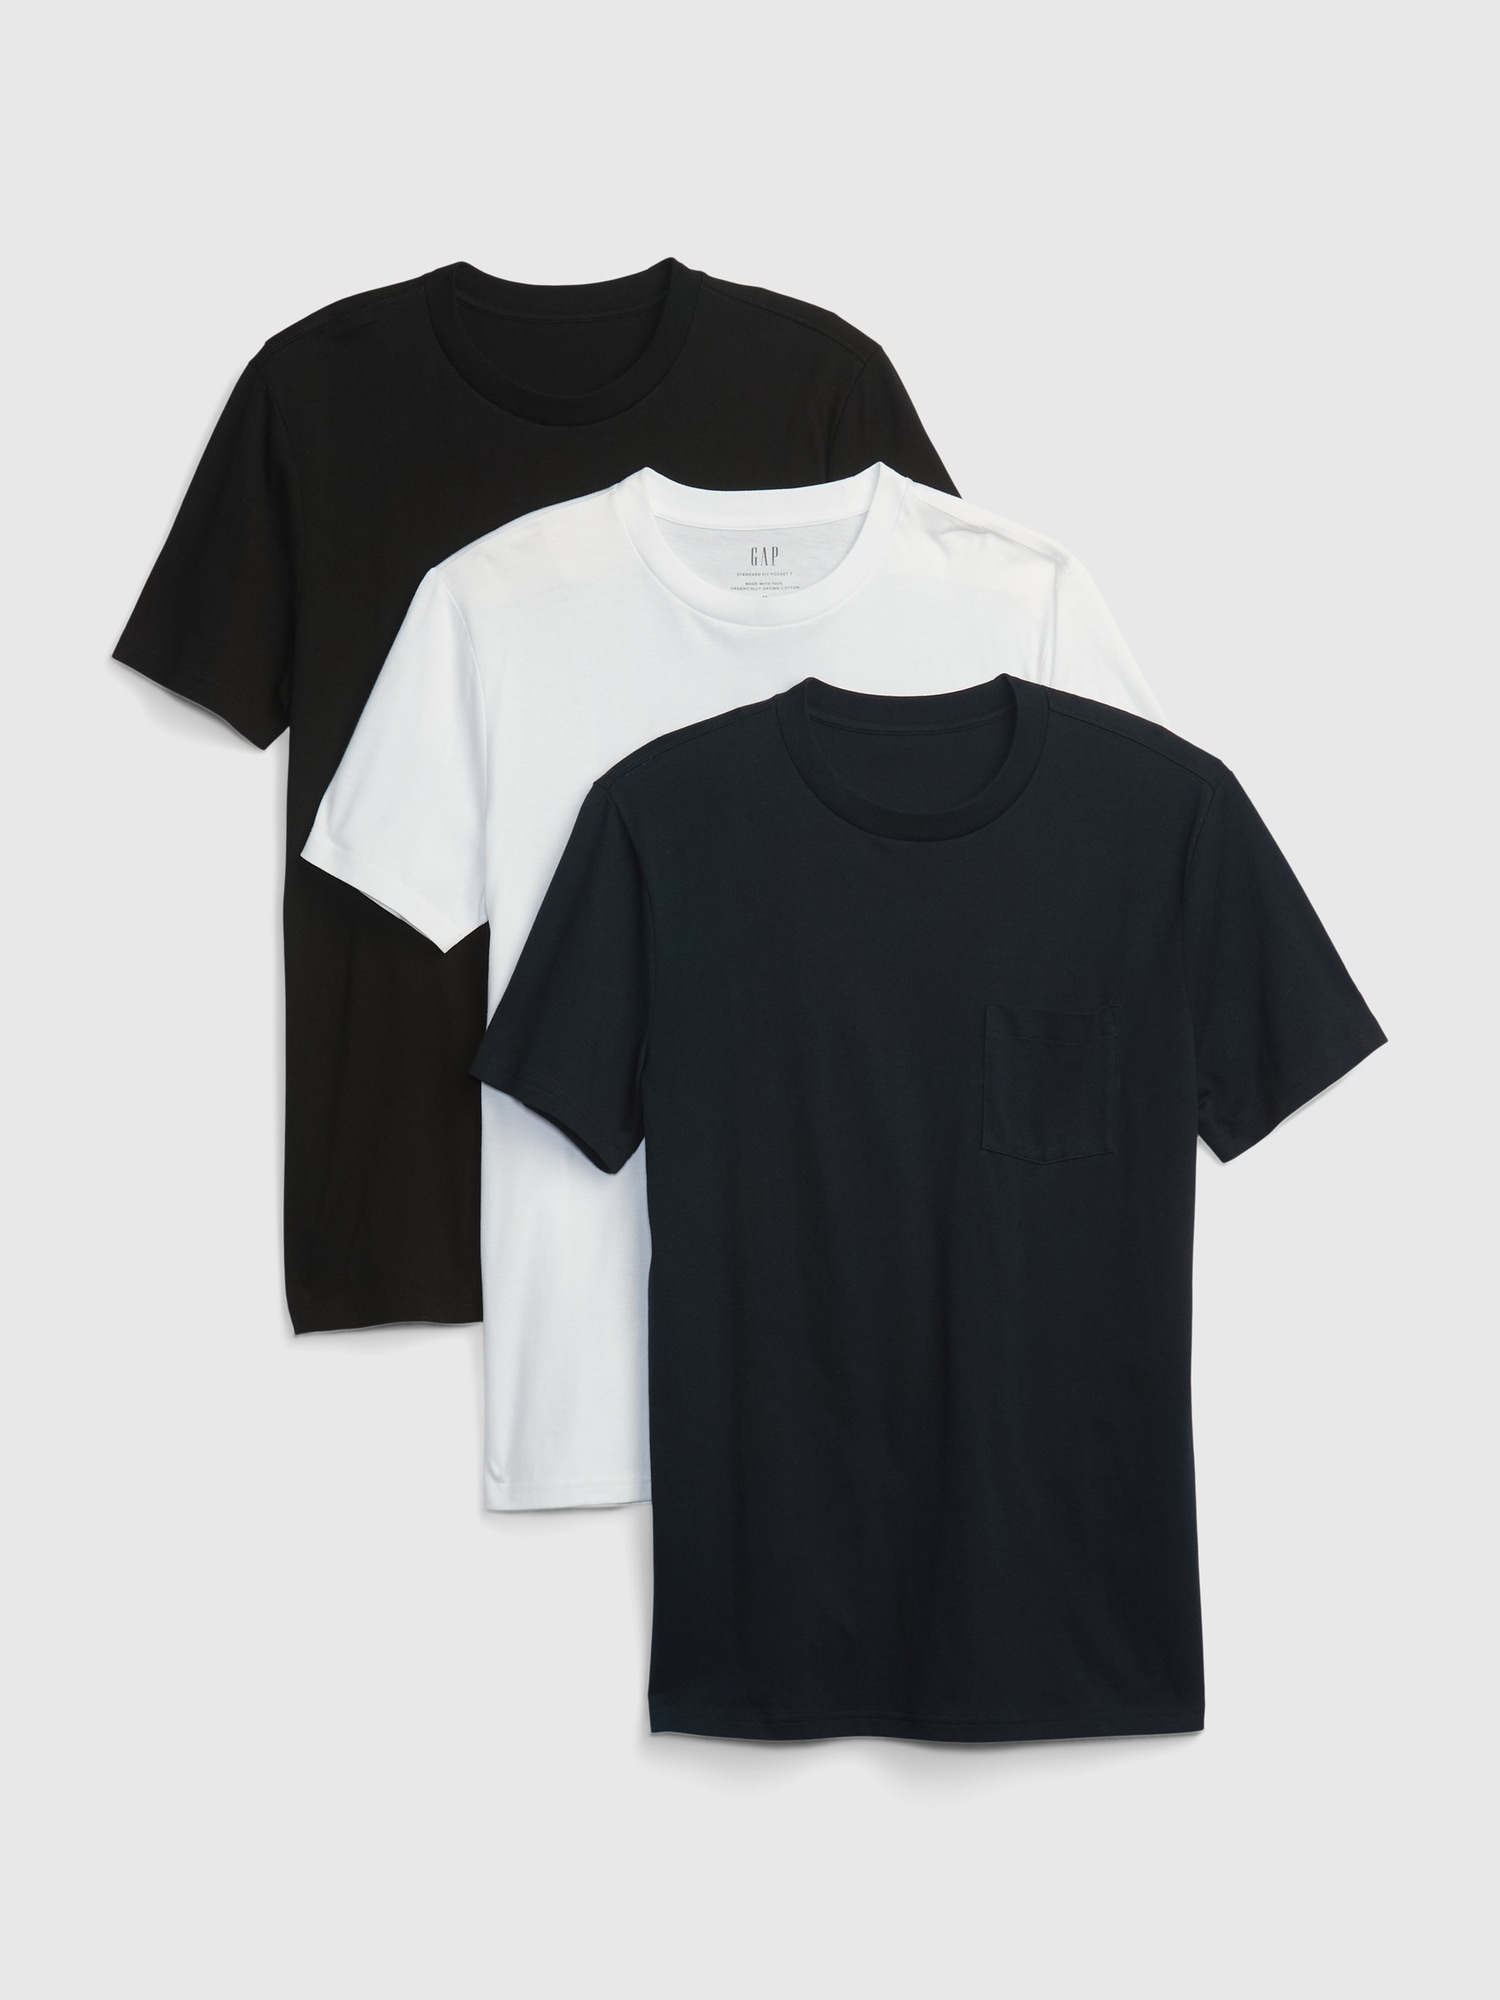 Shop 100% Organic Cotton T-Shirts